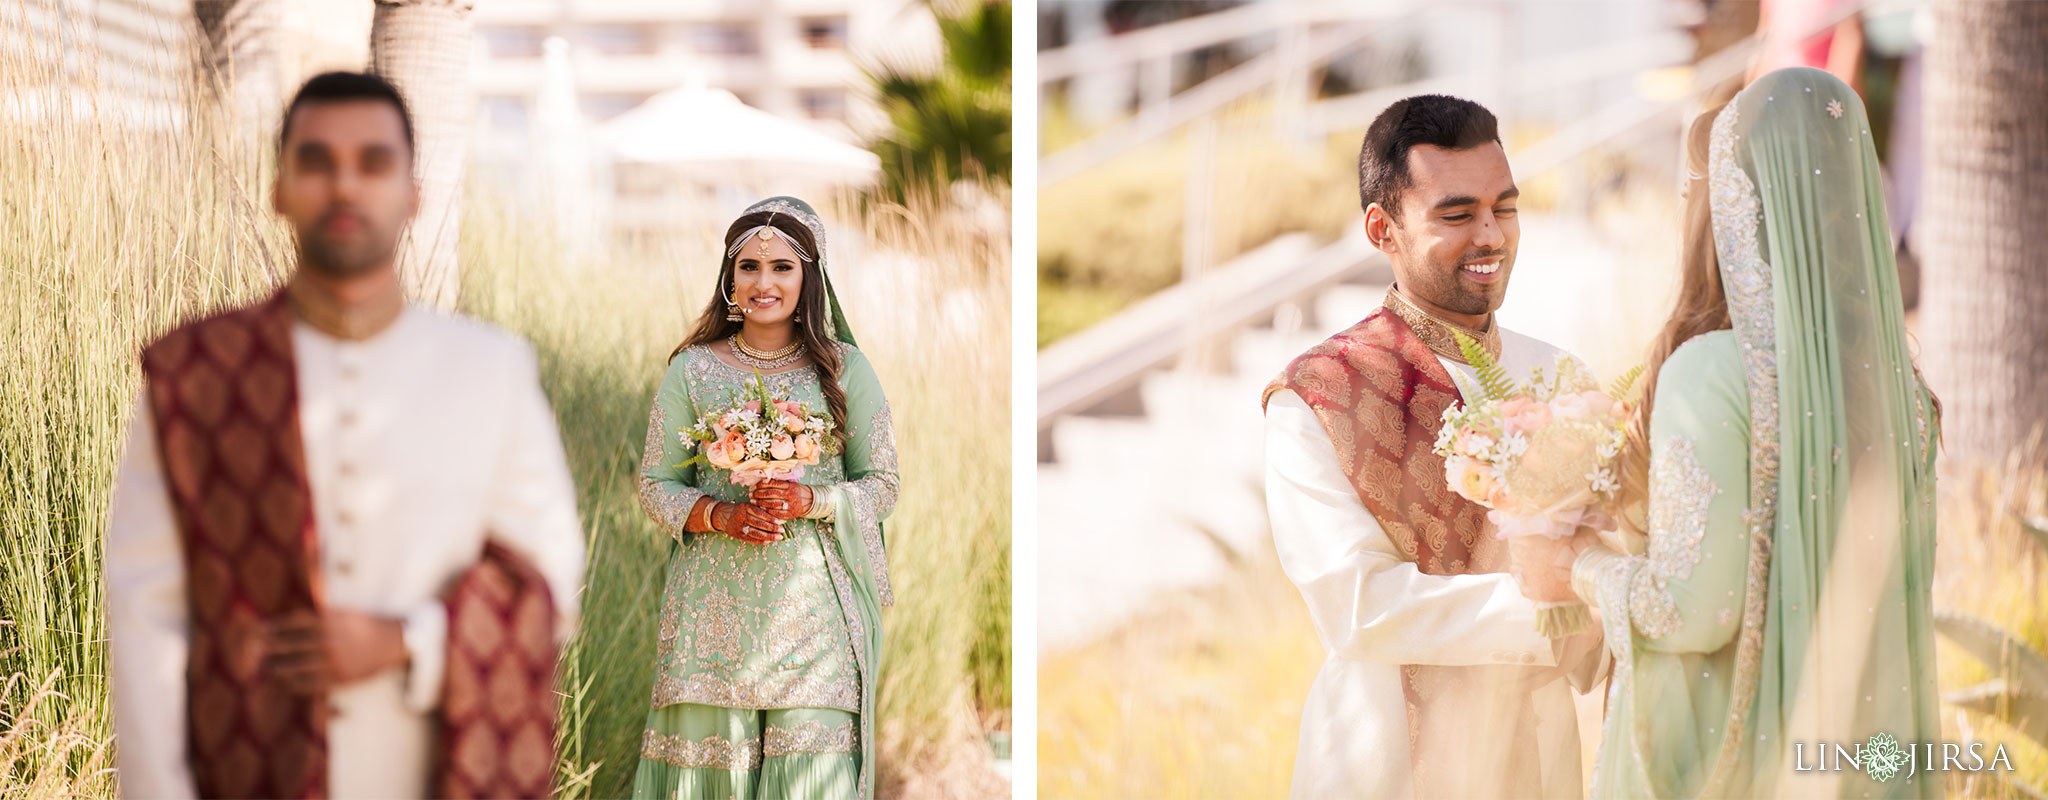 010 pasea hotel huntington beach pakistani muslim wedding photography